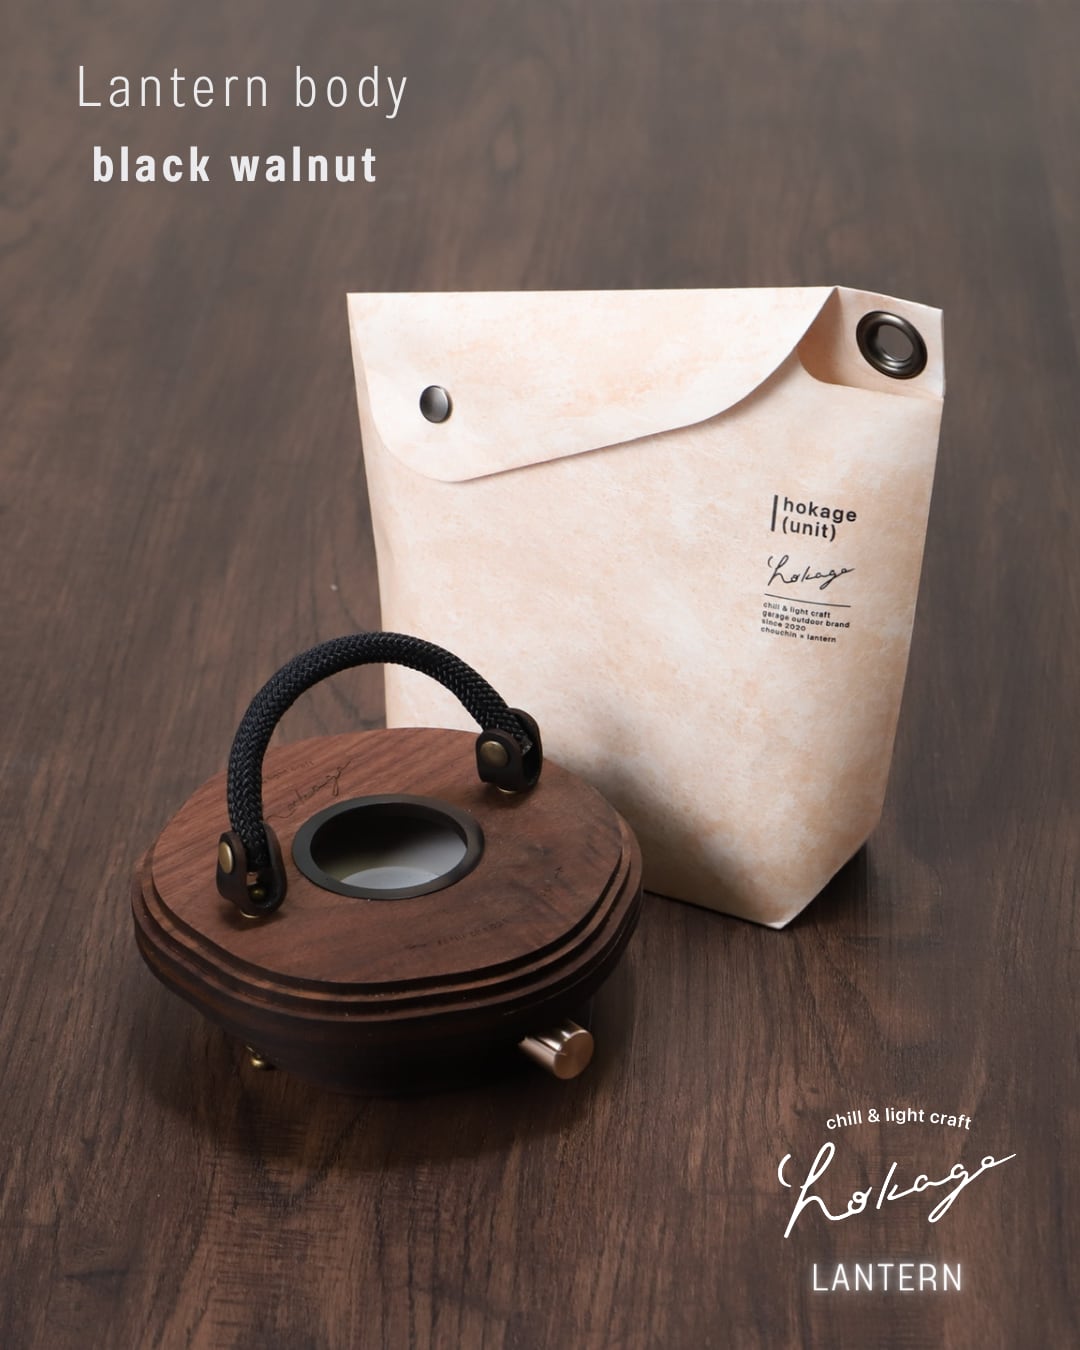 hokage lantern black walnut